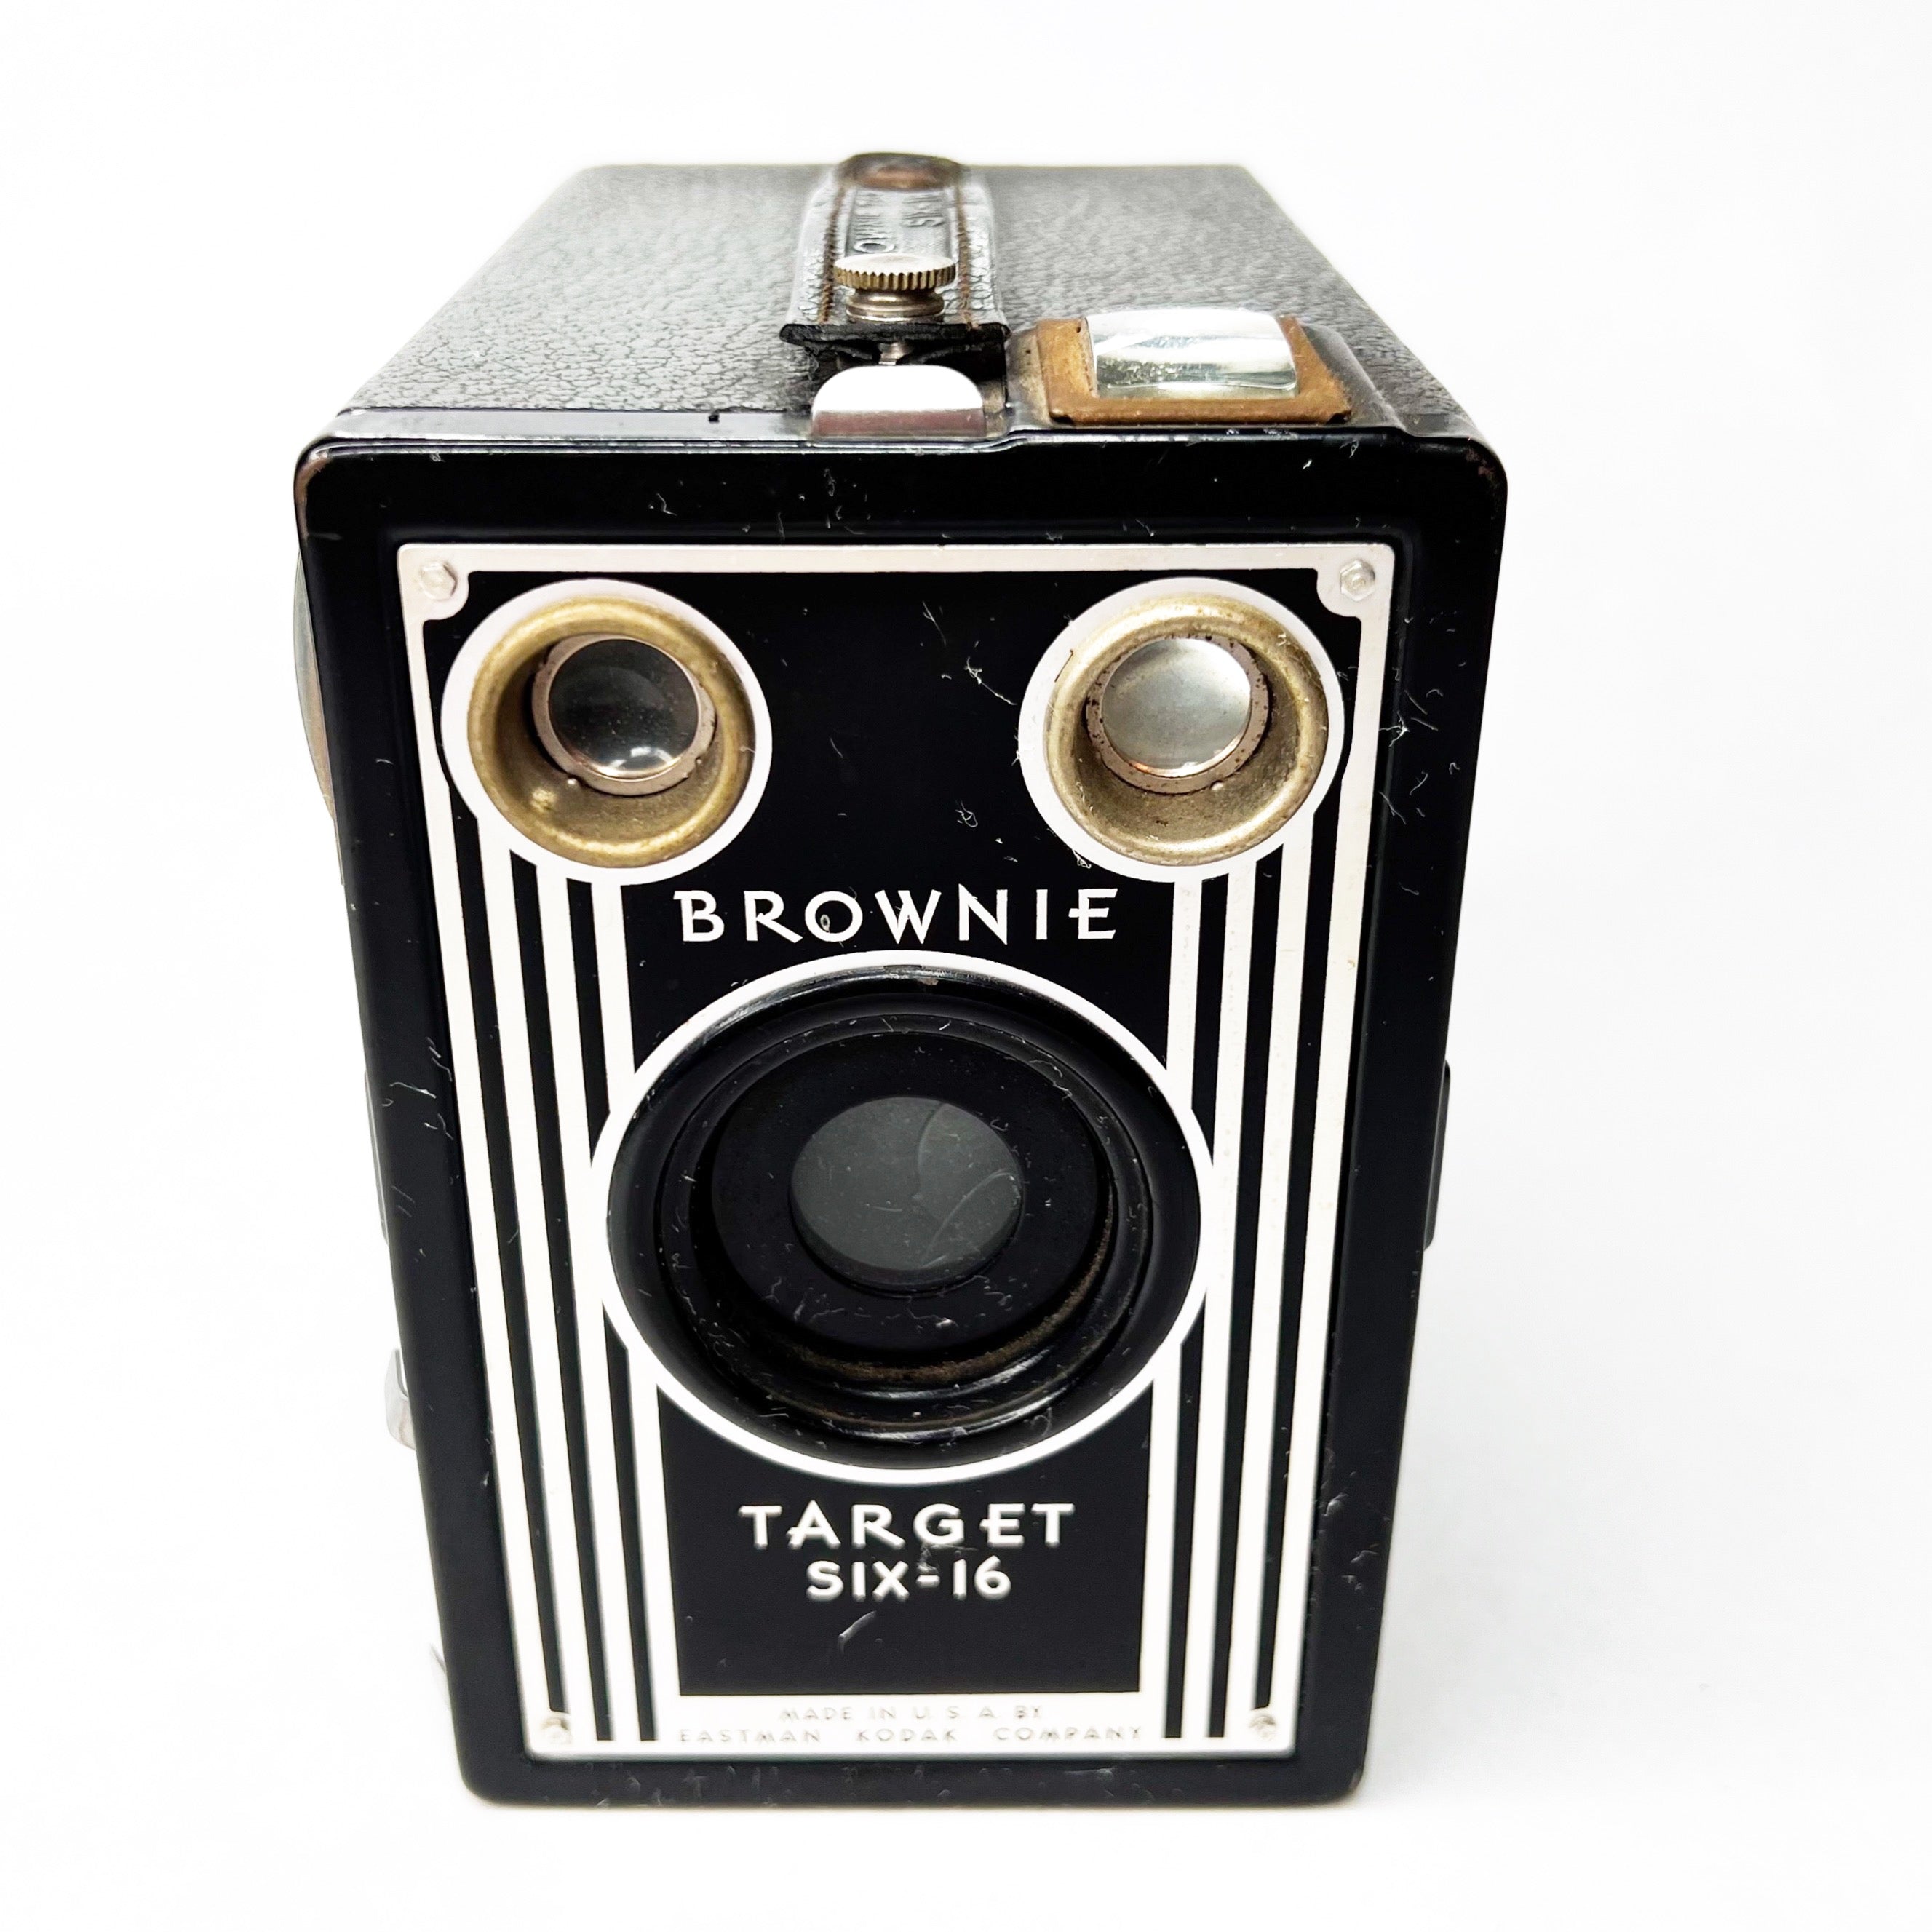 Vintage Target Six-16 Eastman Kodak Company Camera - The Stand Alone